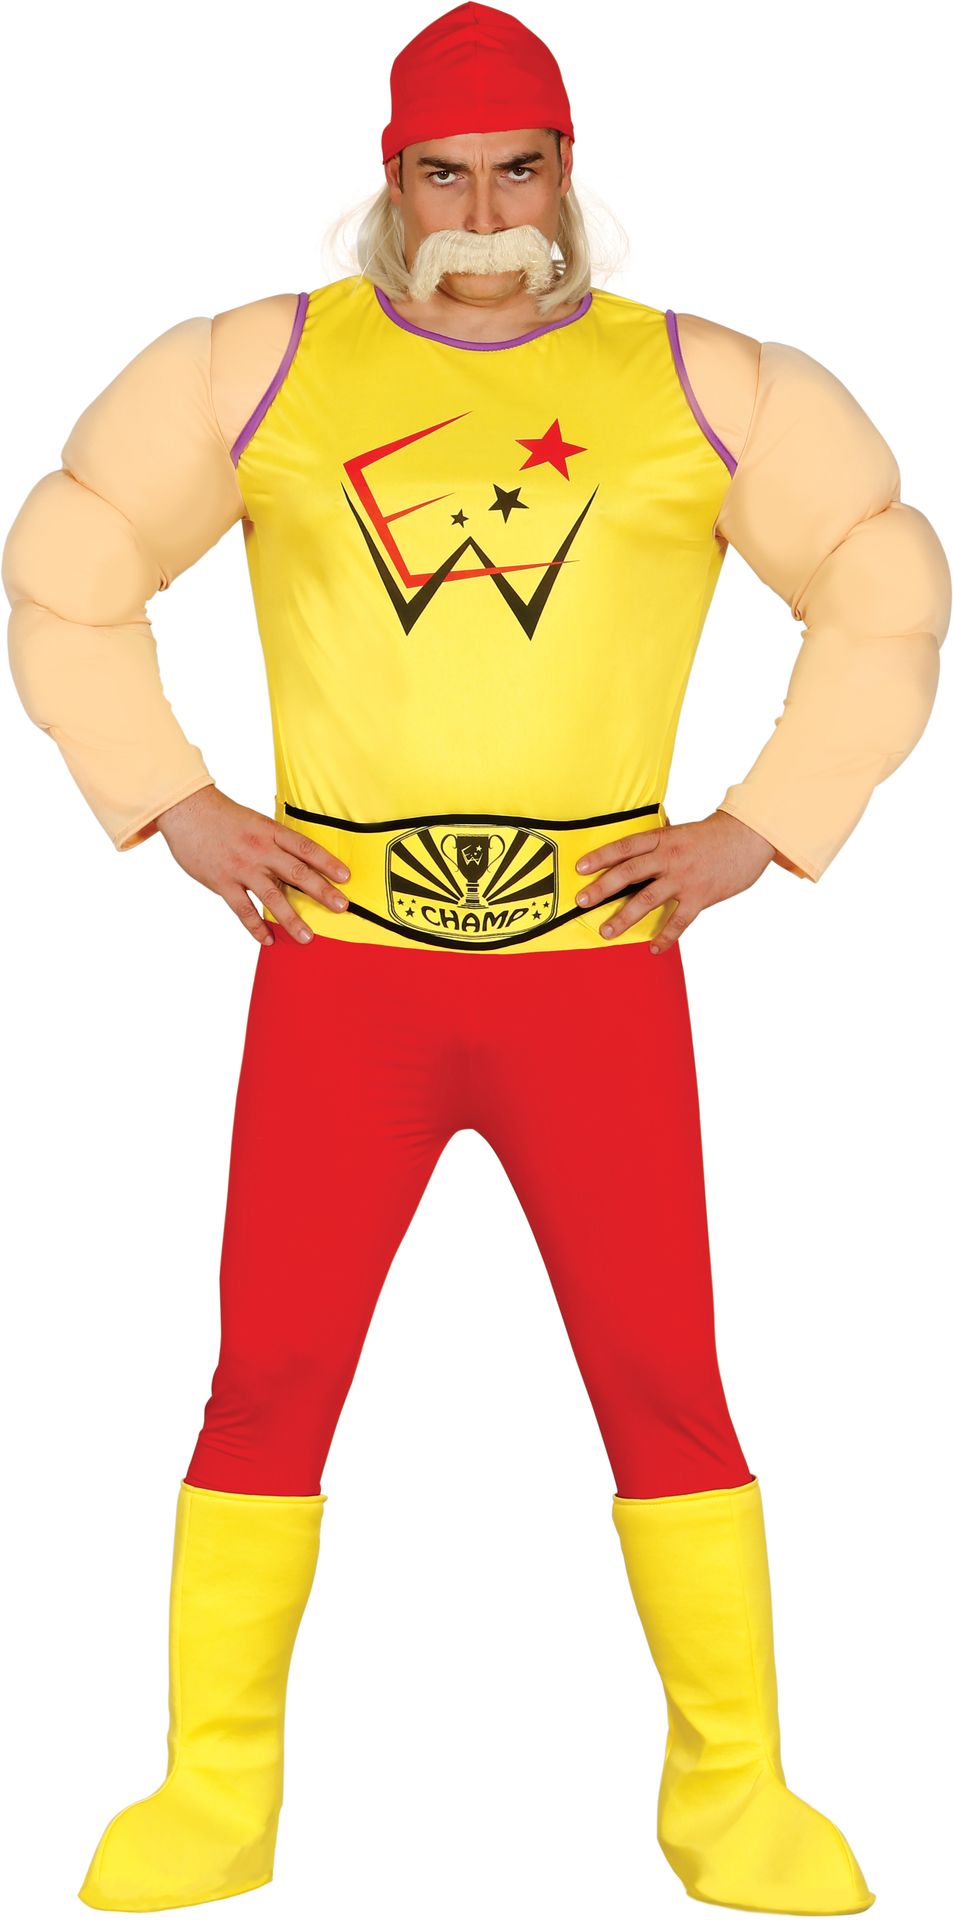 Hulk Hogan outfit